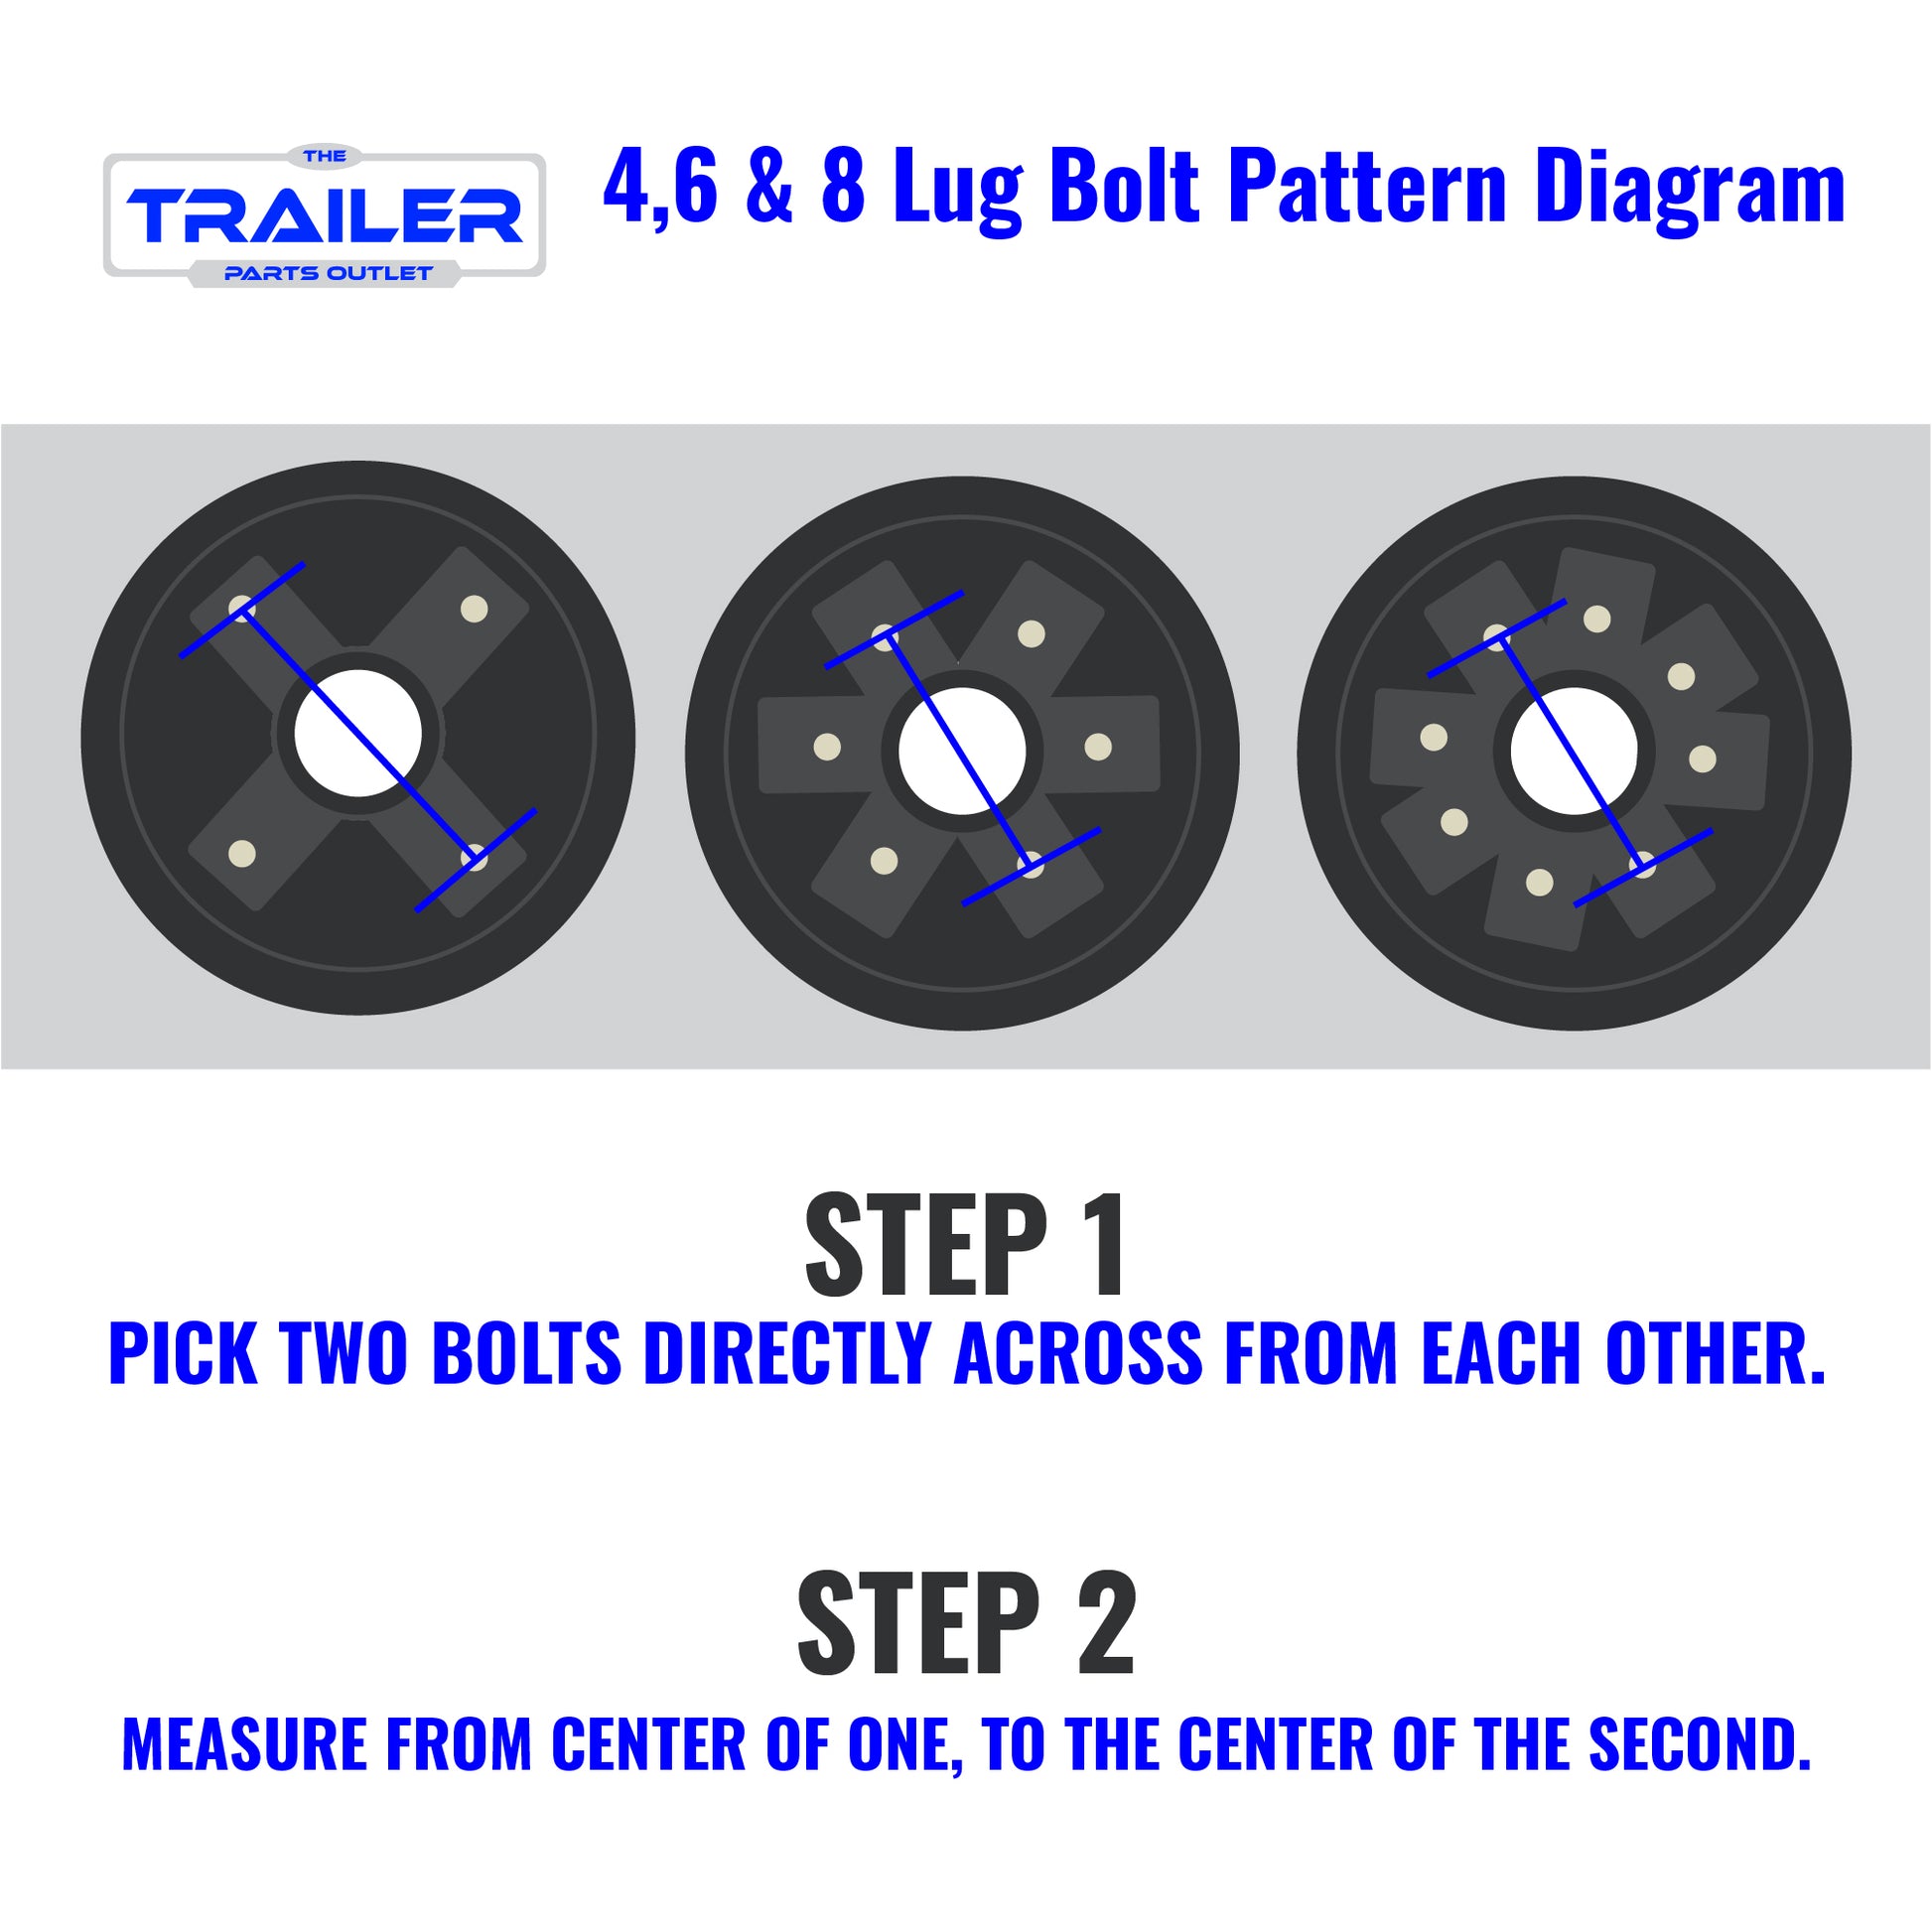 TTPO 4,6 & 8 Lug Bolt Pattern Diagram